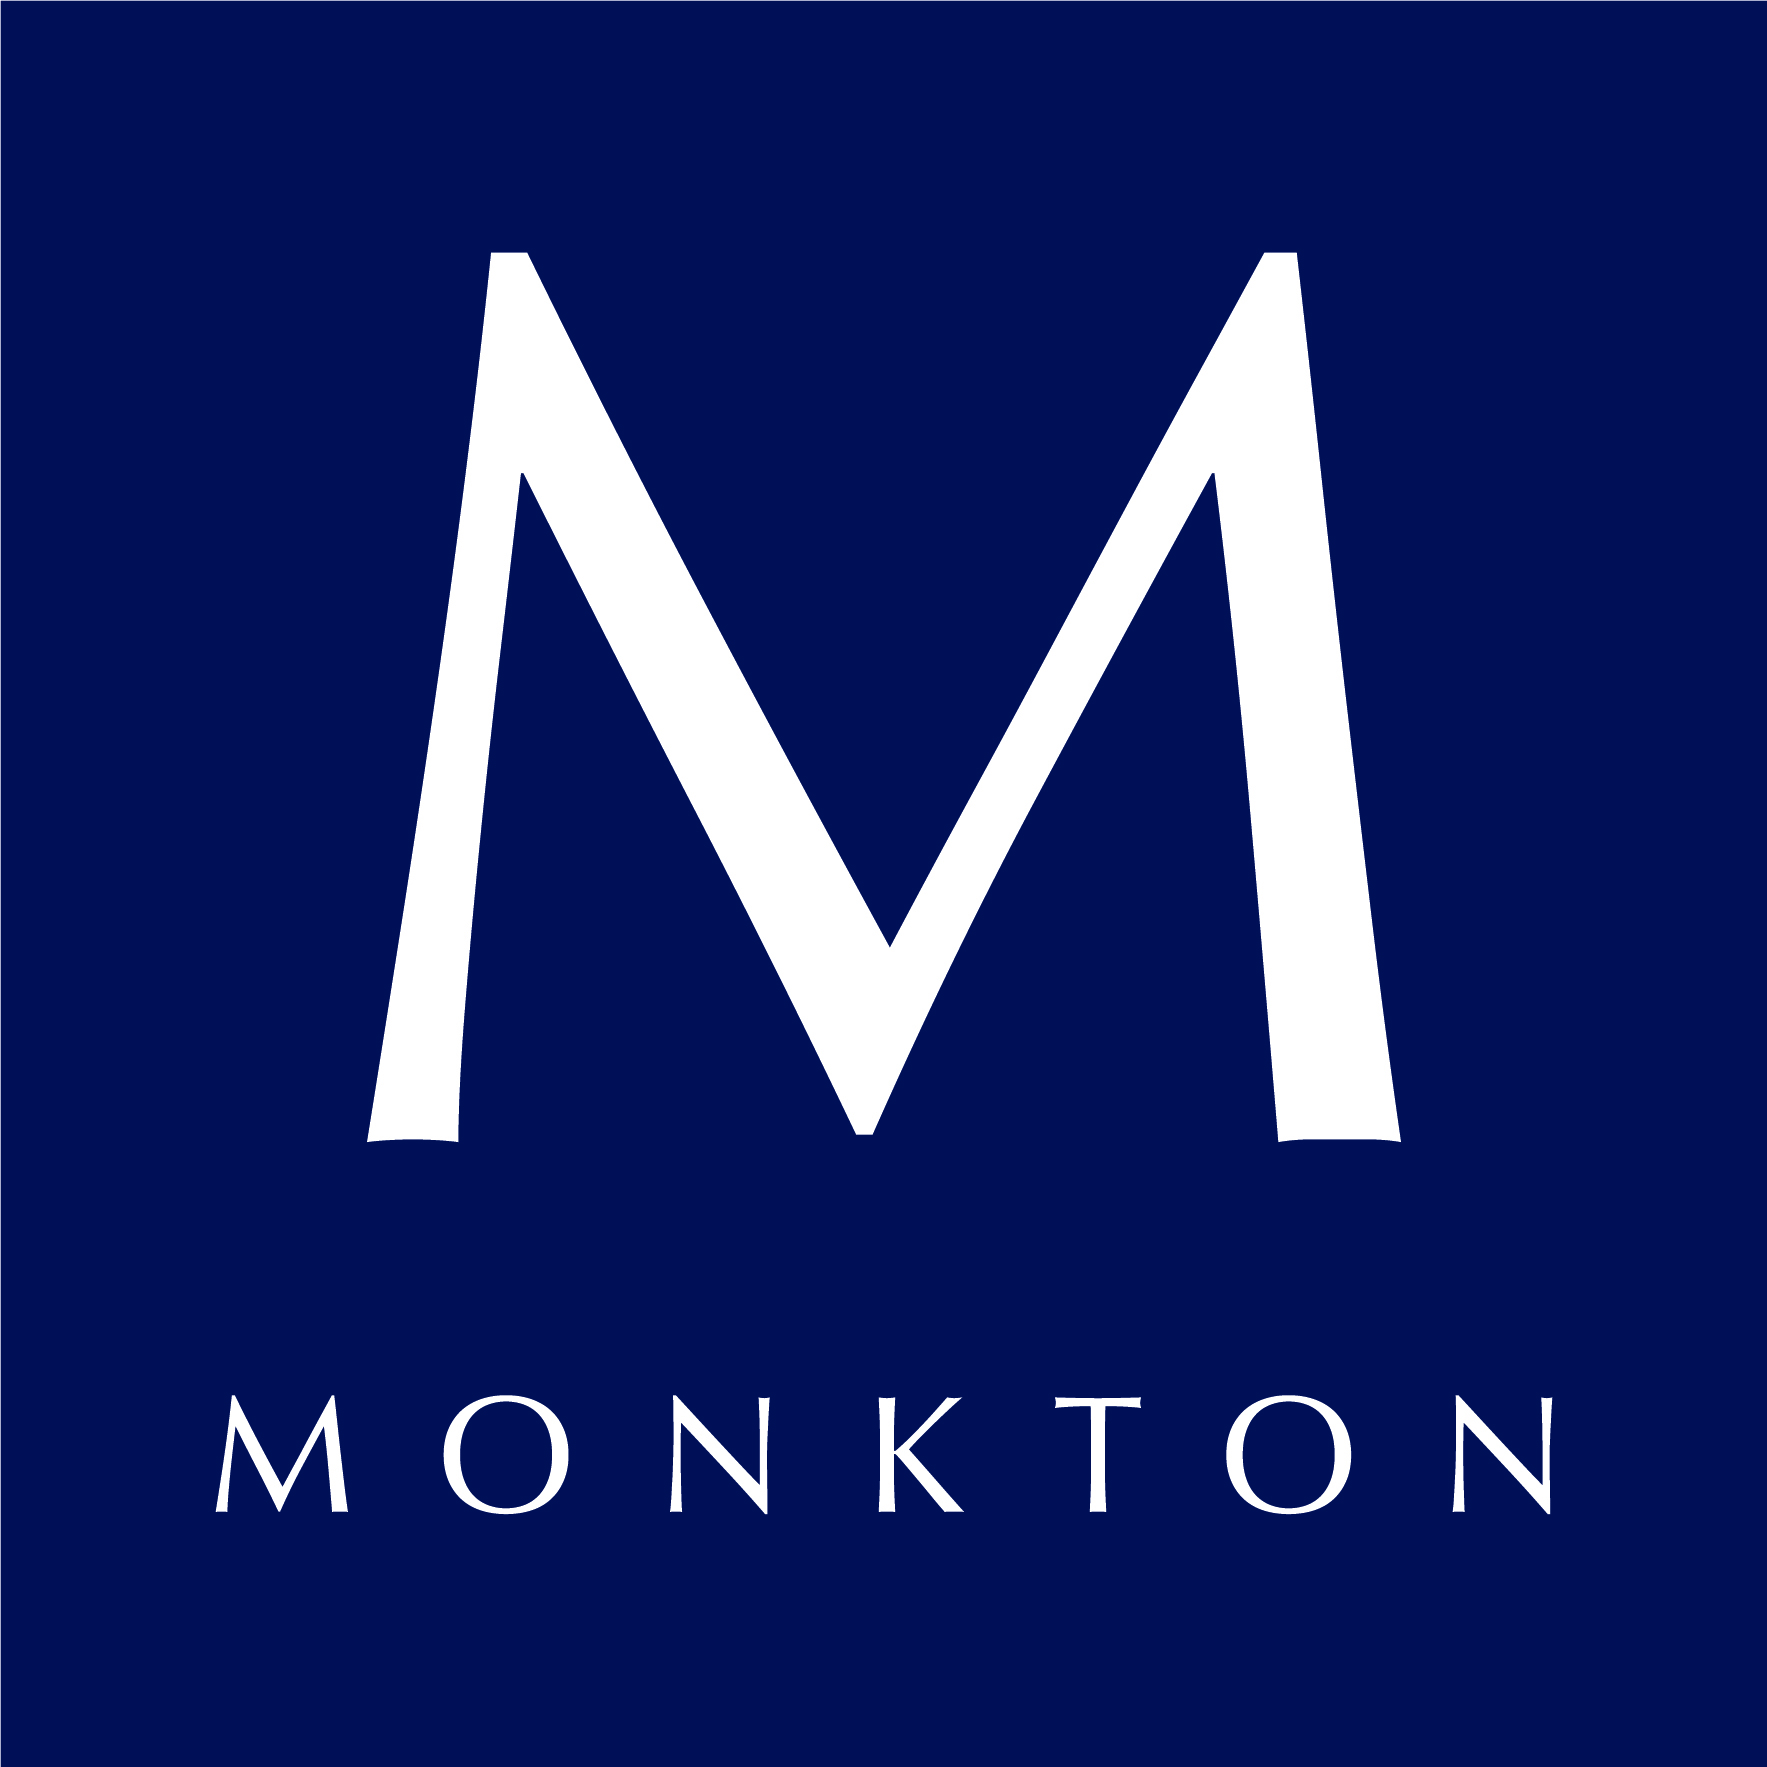 MONKTON_Square_NoBorder_CMYK.jpg